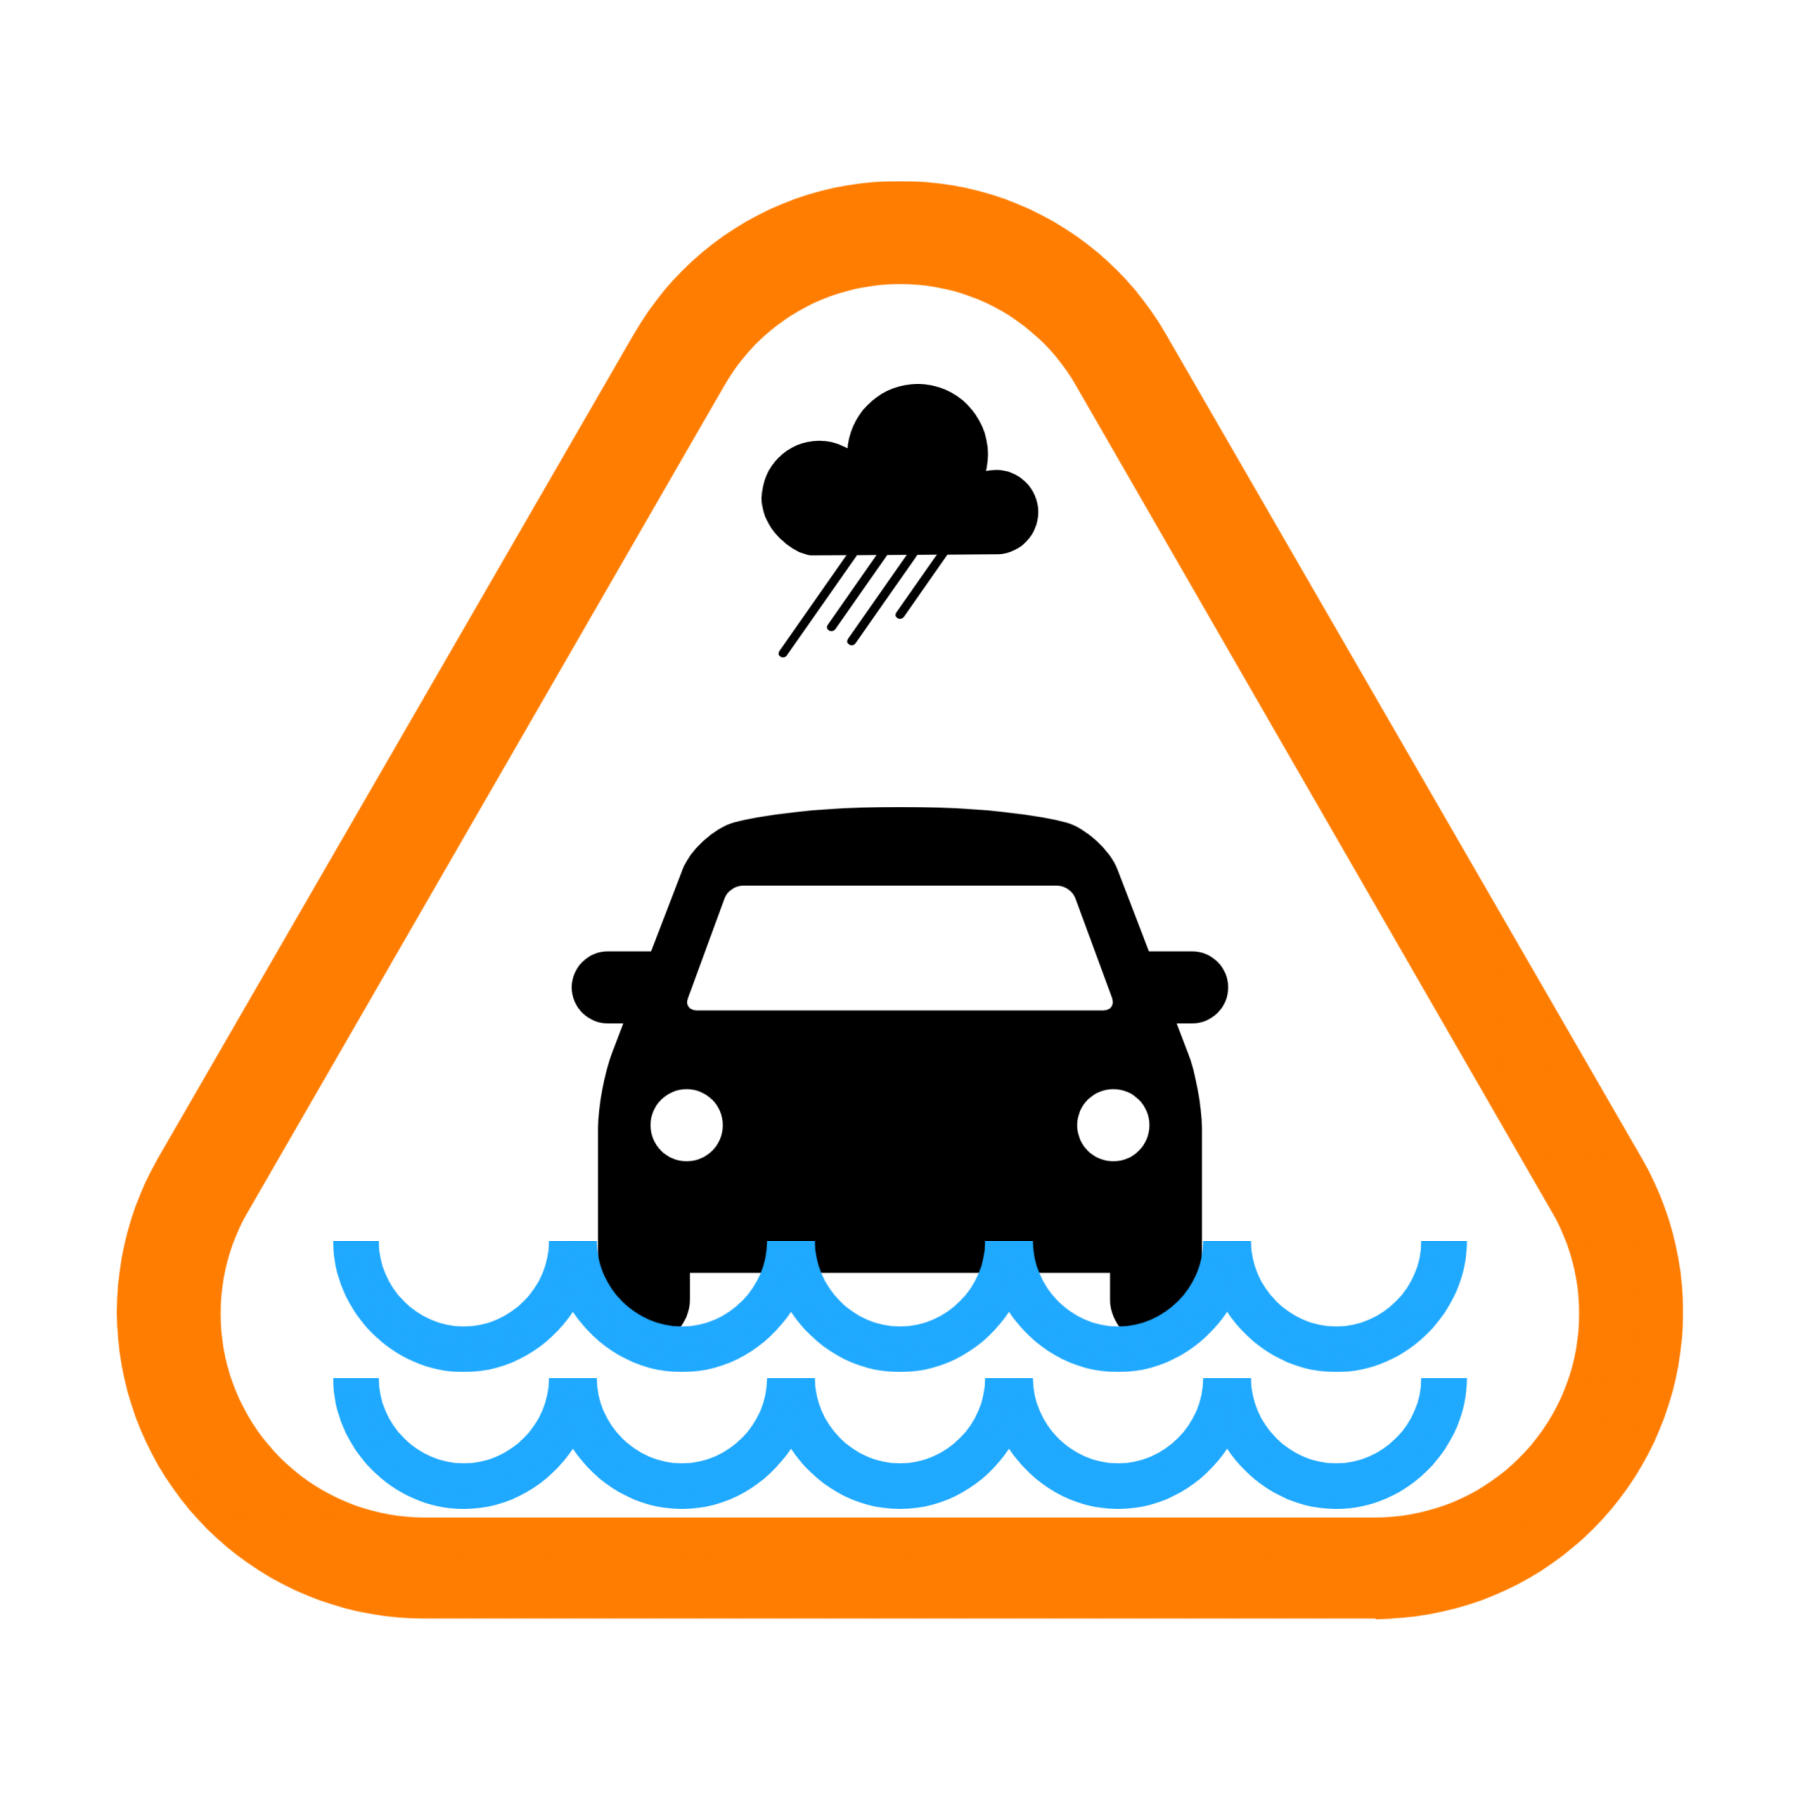 orange car image with moderate flooding